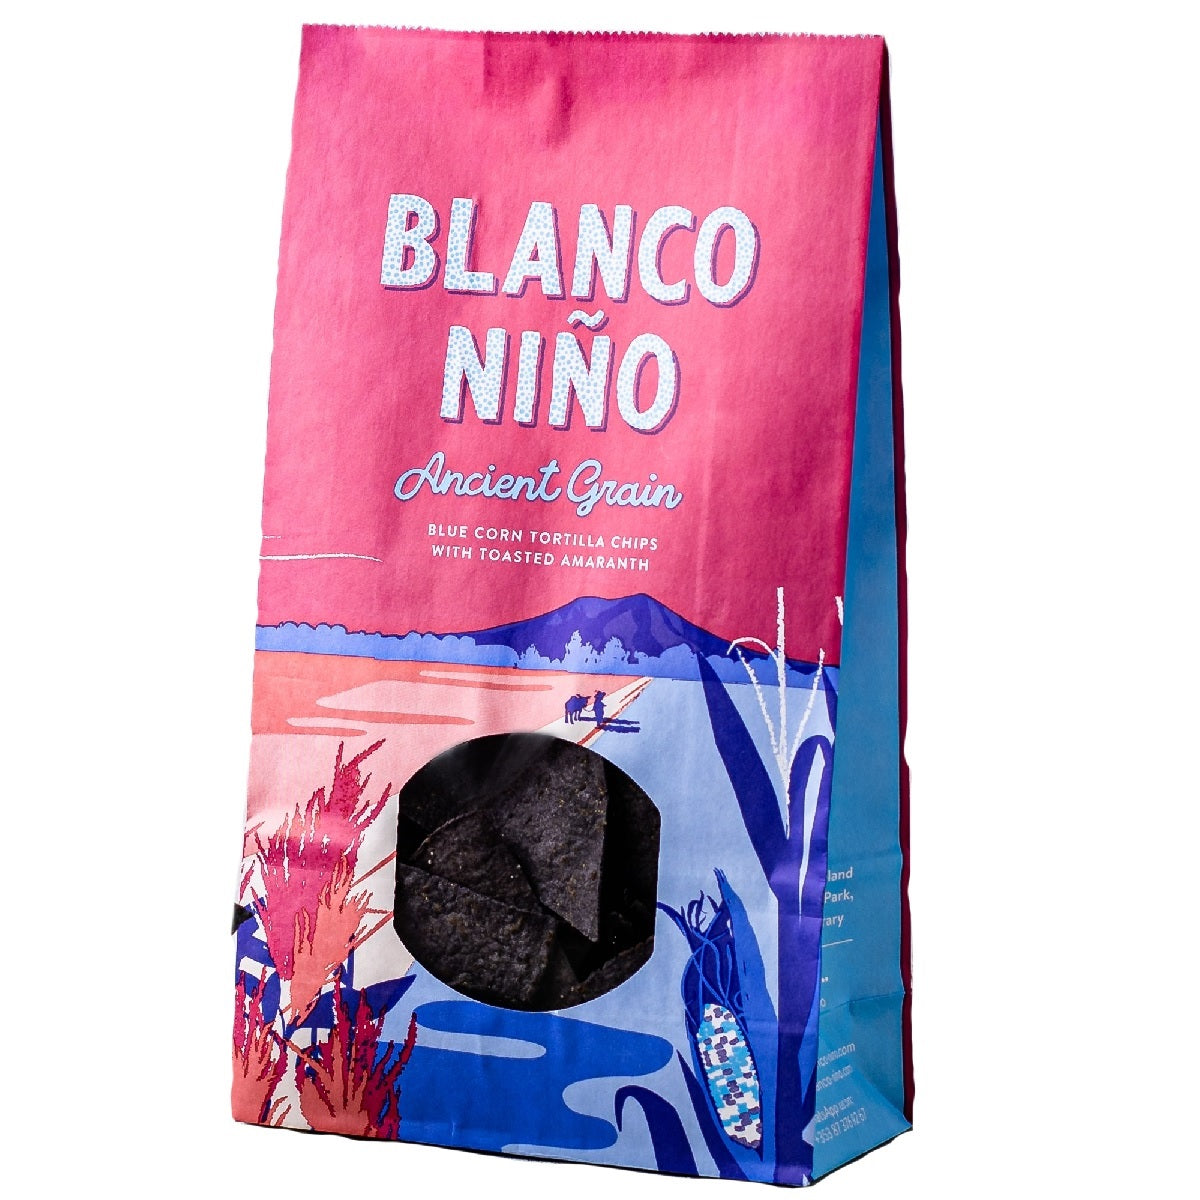 Blanco Nino Ancient Grain Blue Corn Tortilla Chips with Toasted Amaranth 170g